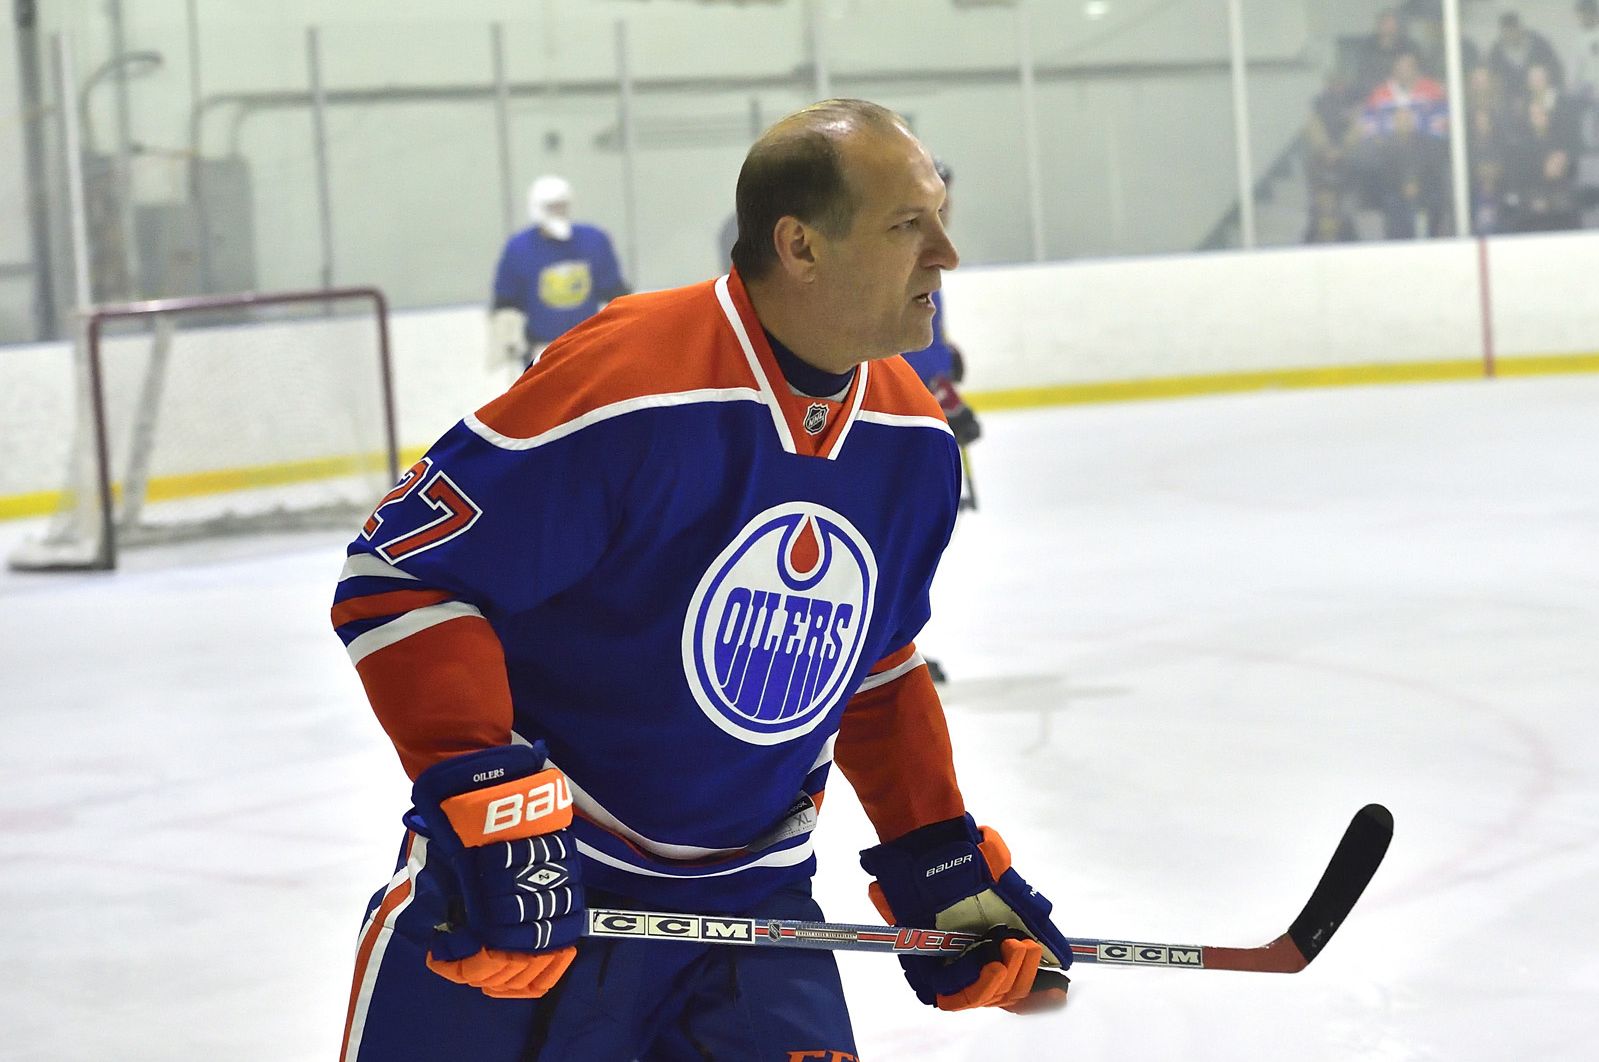 1980s Edmonton Oilers enforcer Dave Semenko dies of cancer at 59 - ESPN